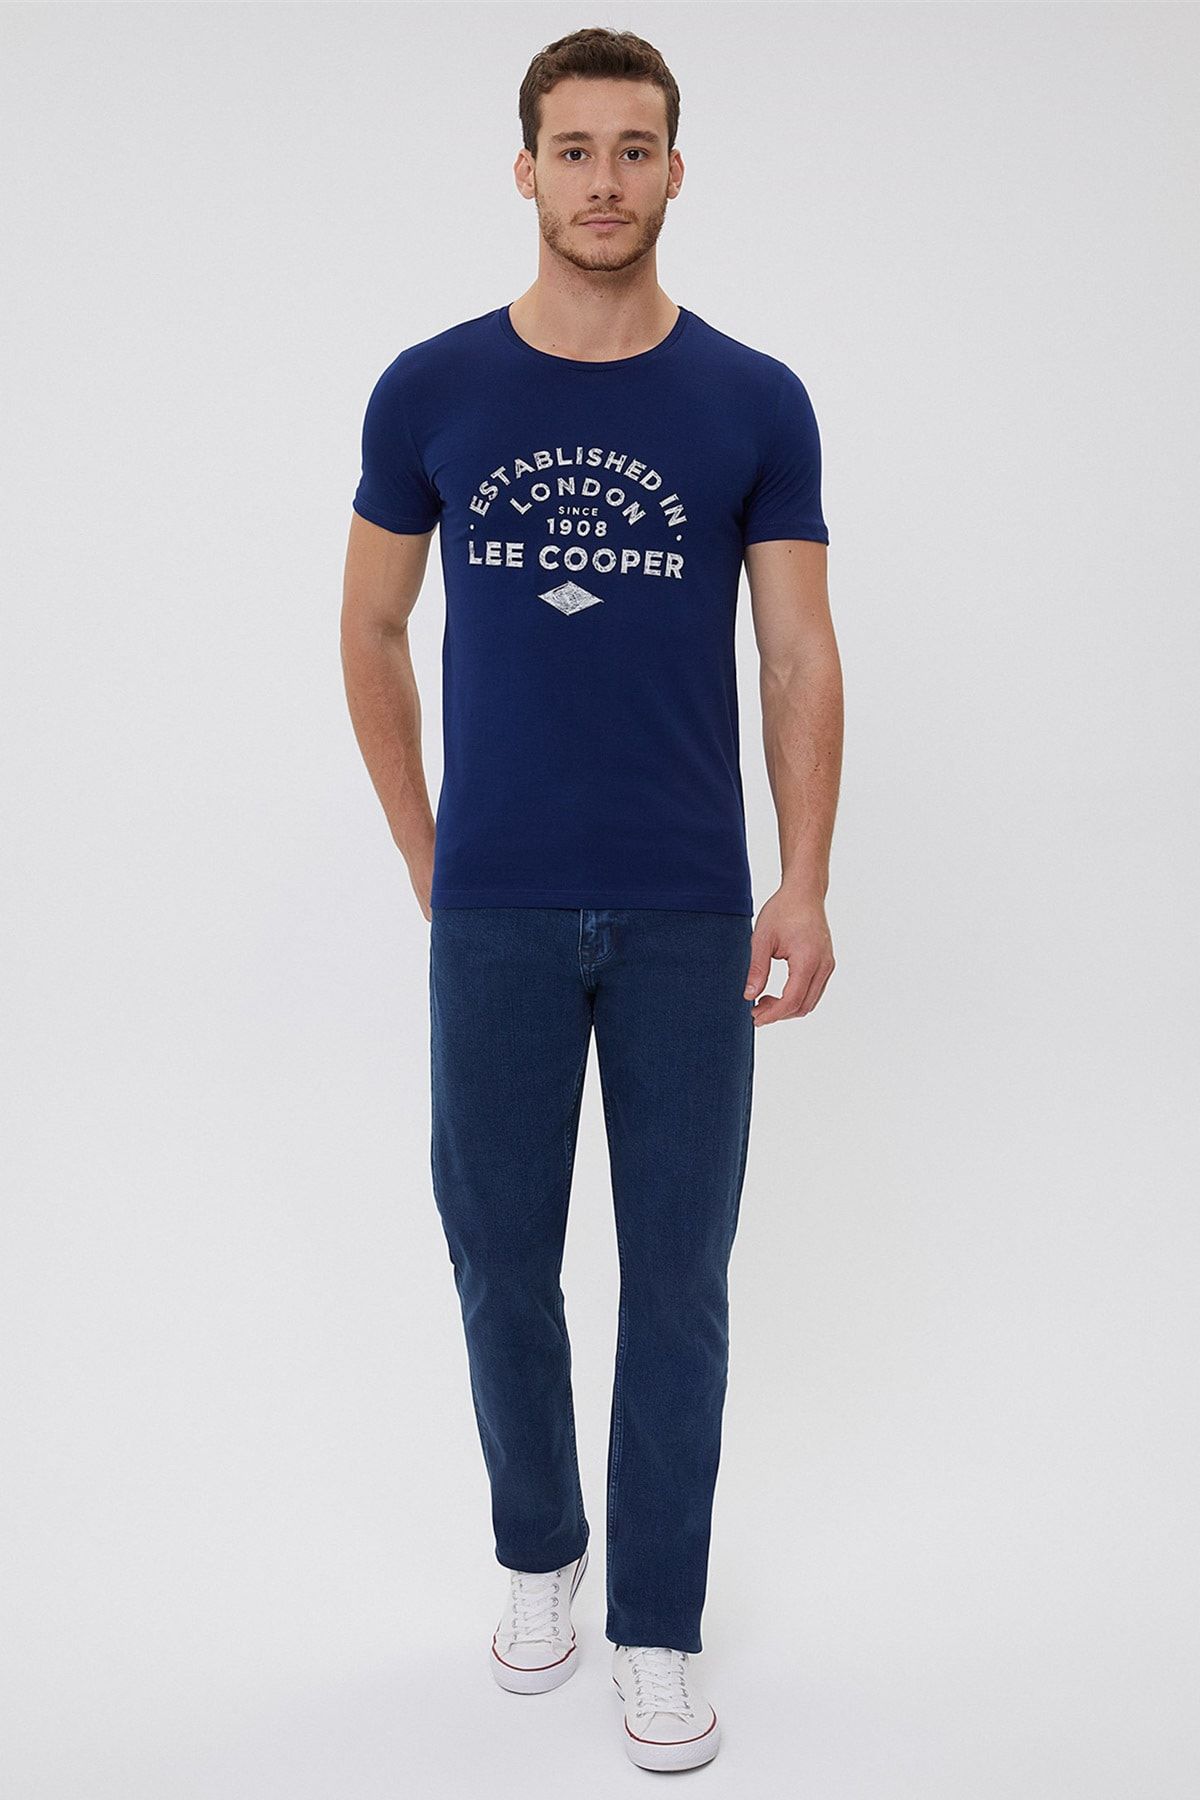 Lee Cooper Erkek Established O Yaka T-Shirt Canli Lacivert 202 LCM 242010